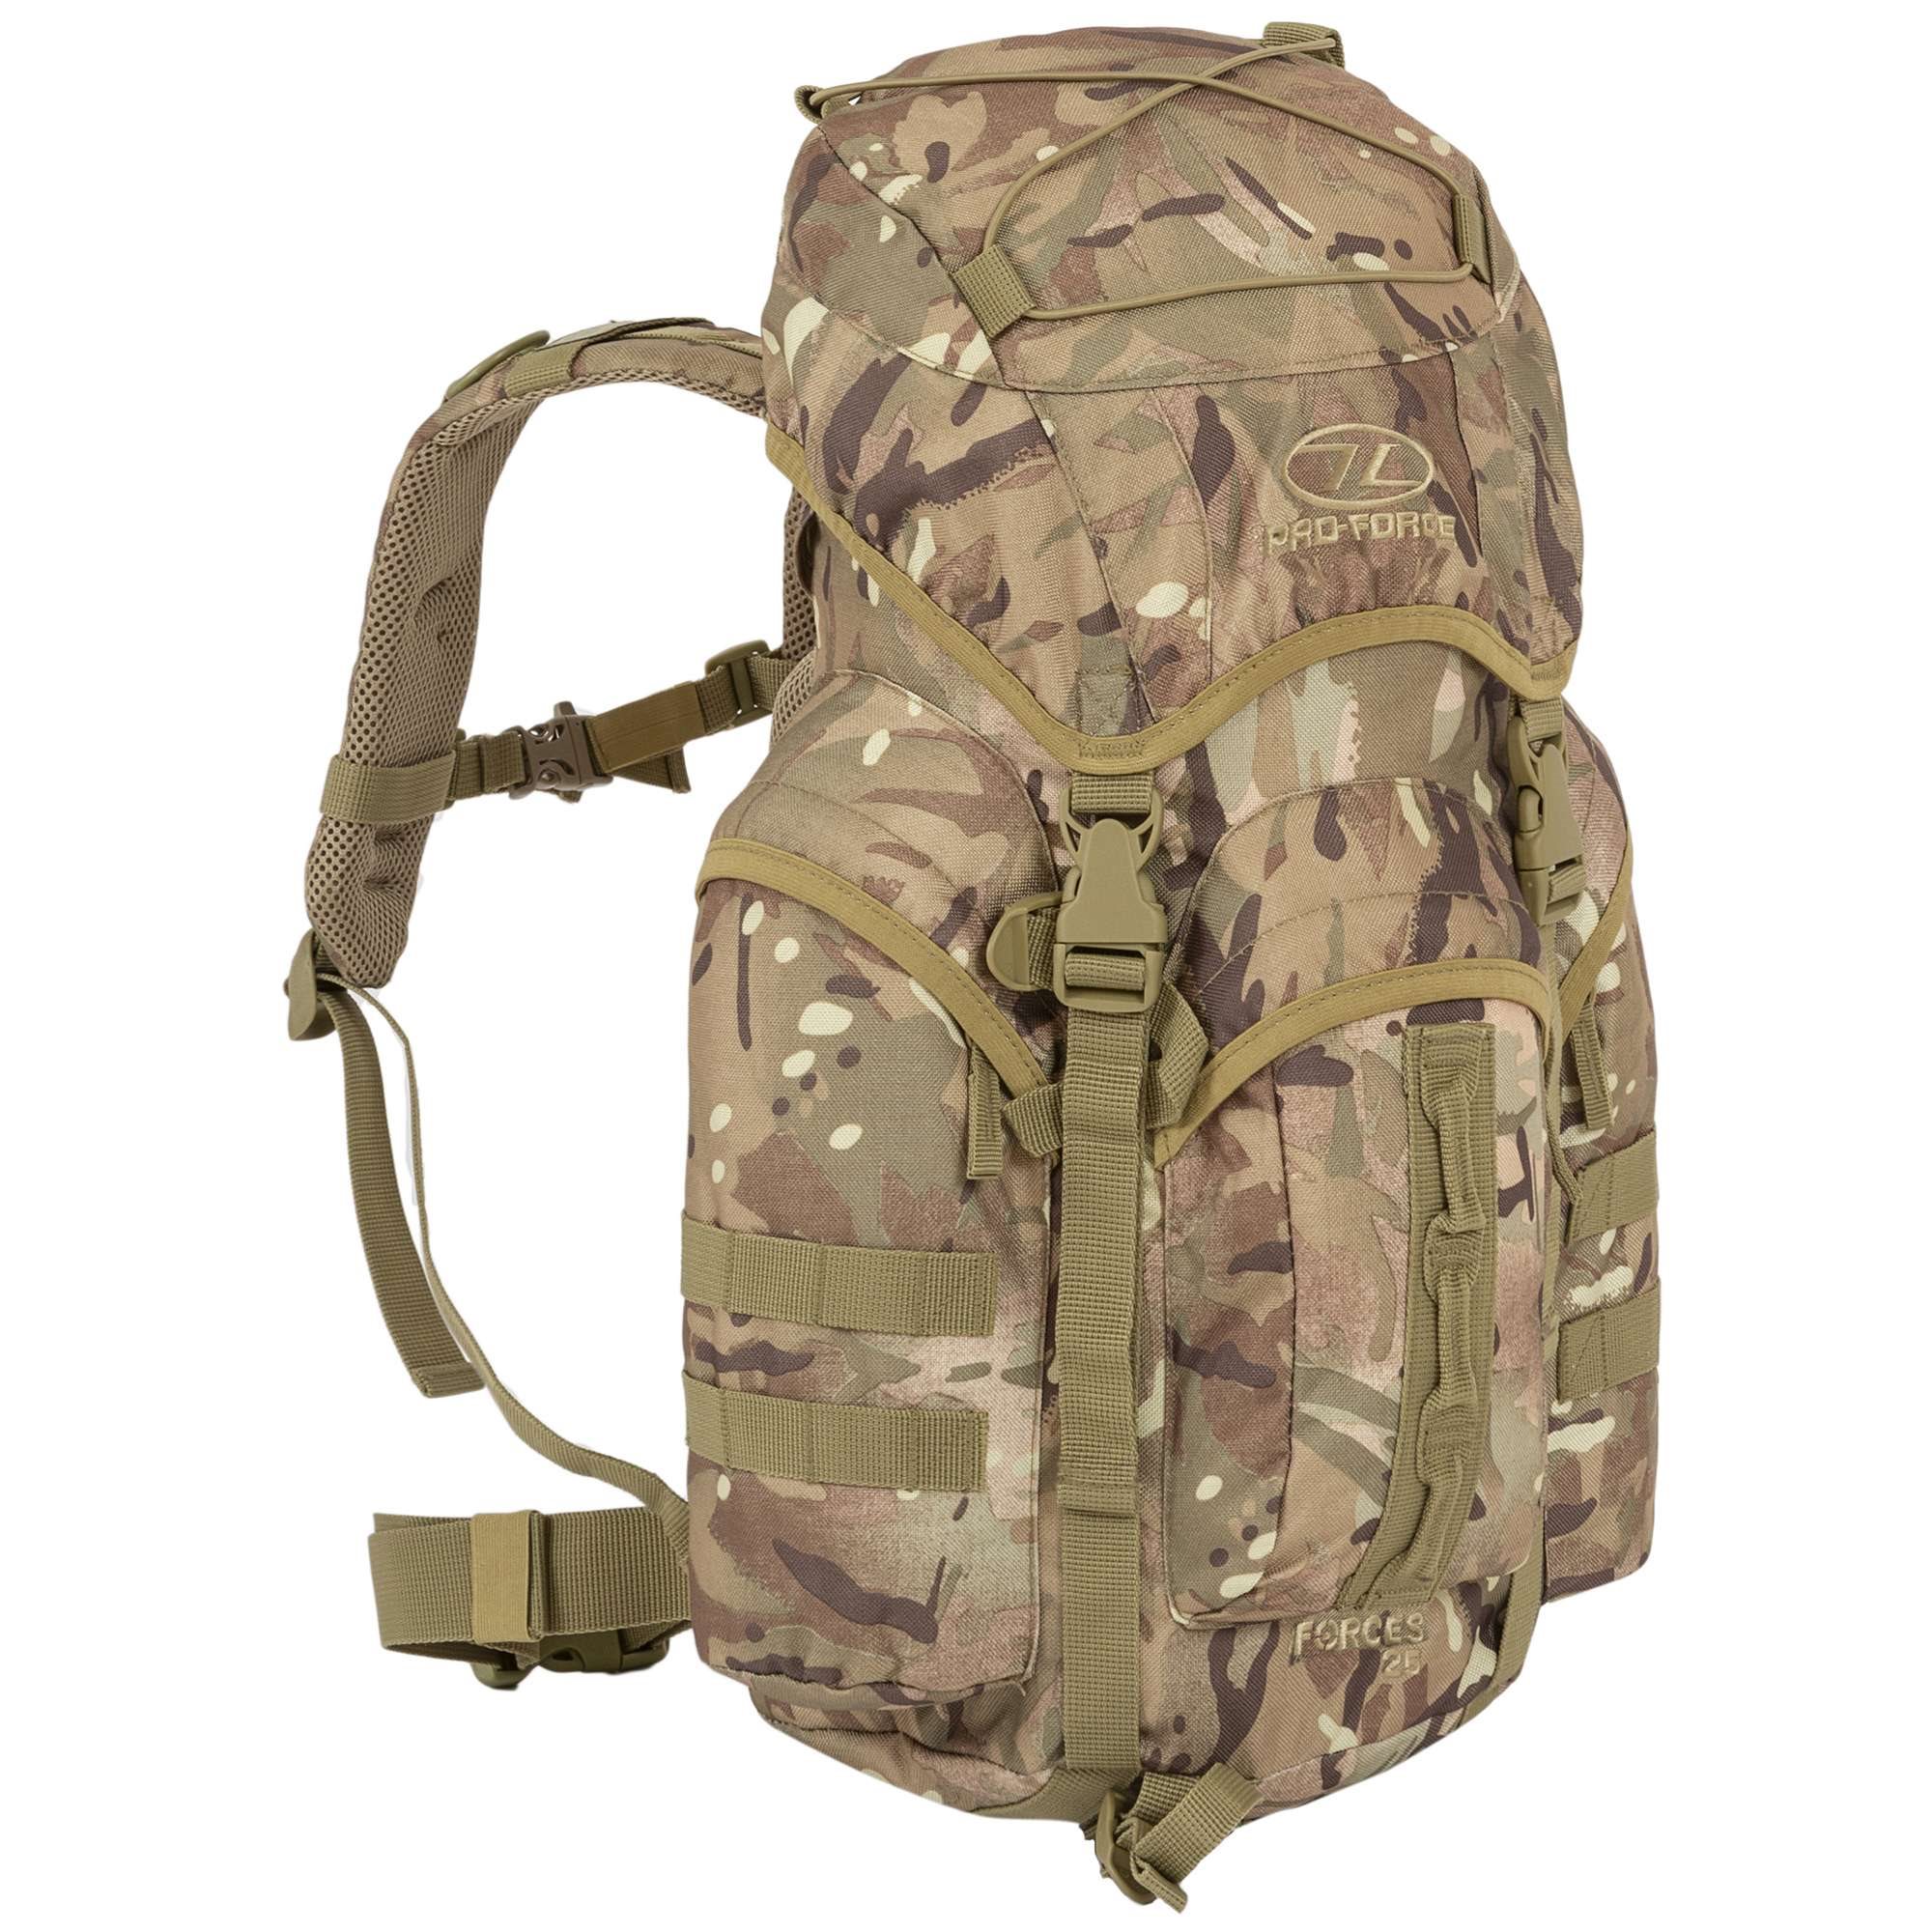 Highlander New Forces Waterproof Rucksack Bag Pro-force Army Combat 33l Black 